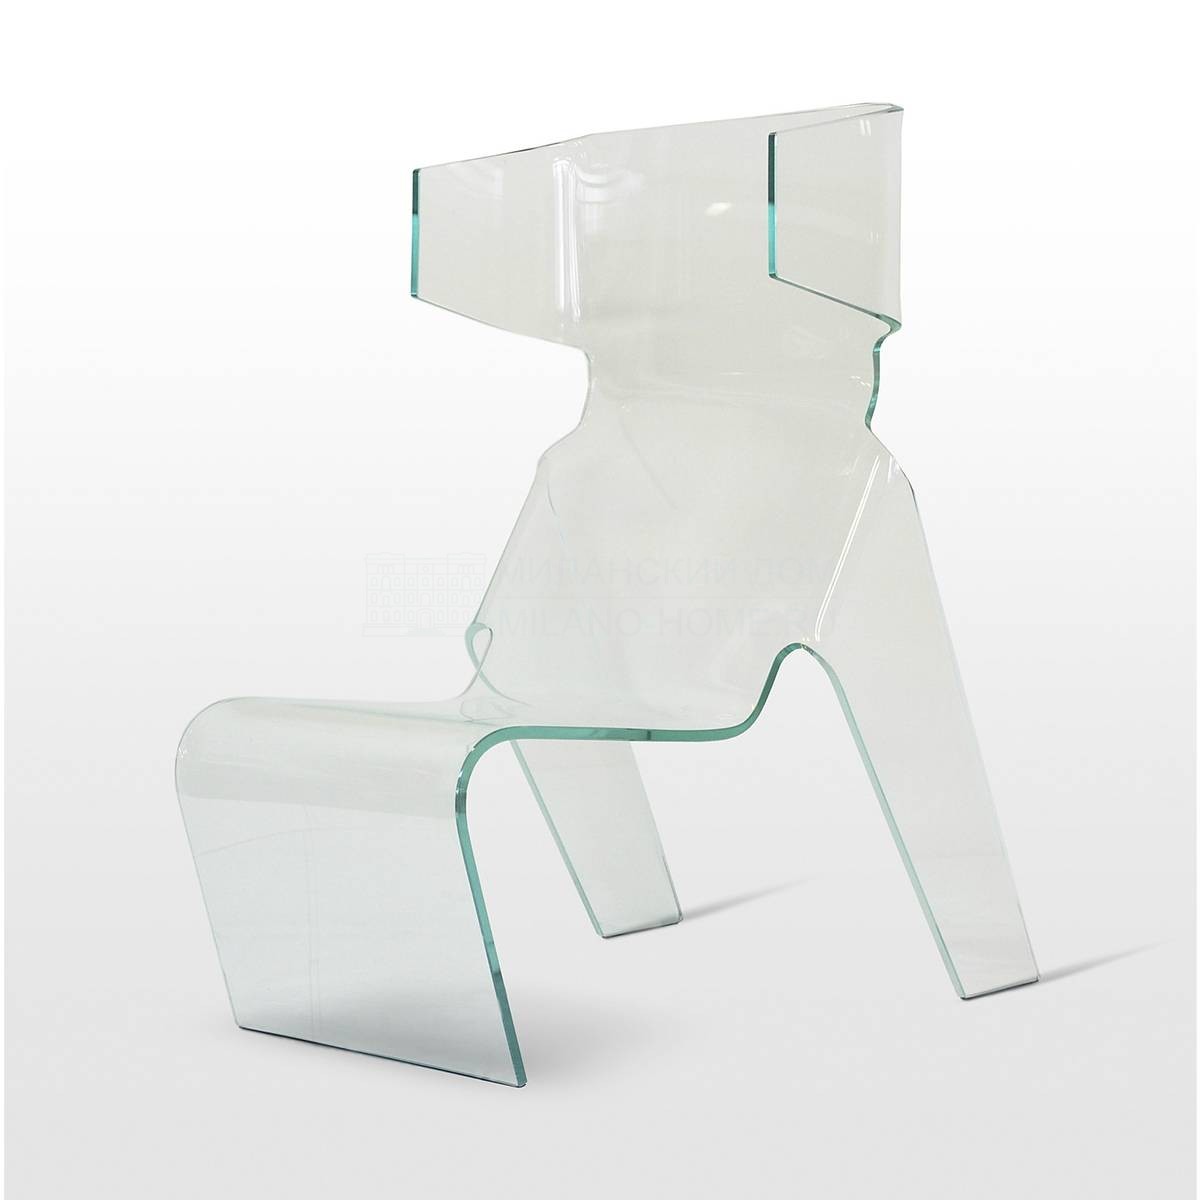 Кресло Kleer armchair из Италии фабрики DOMODINAMICA